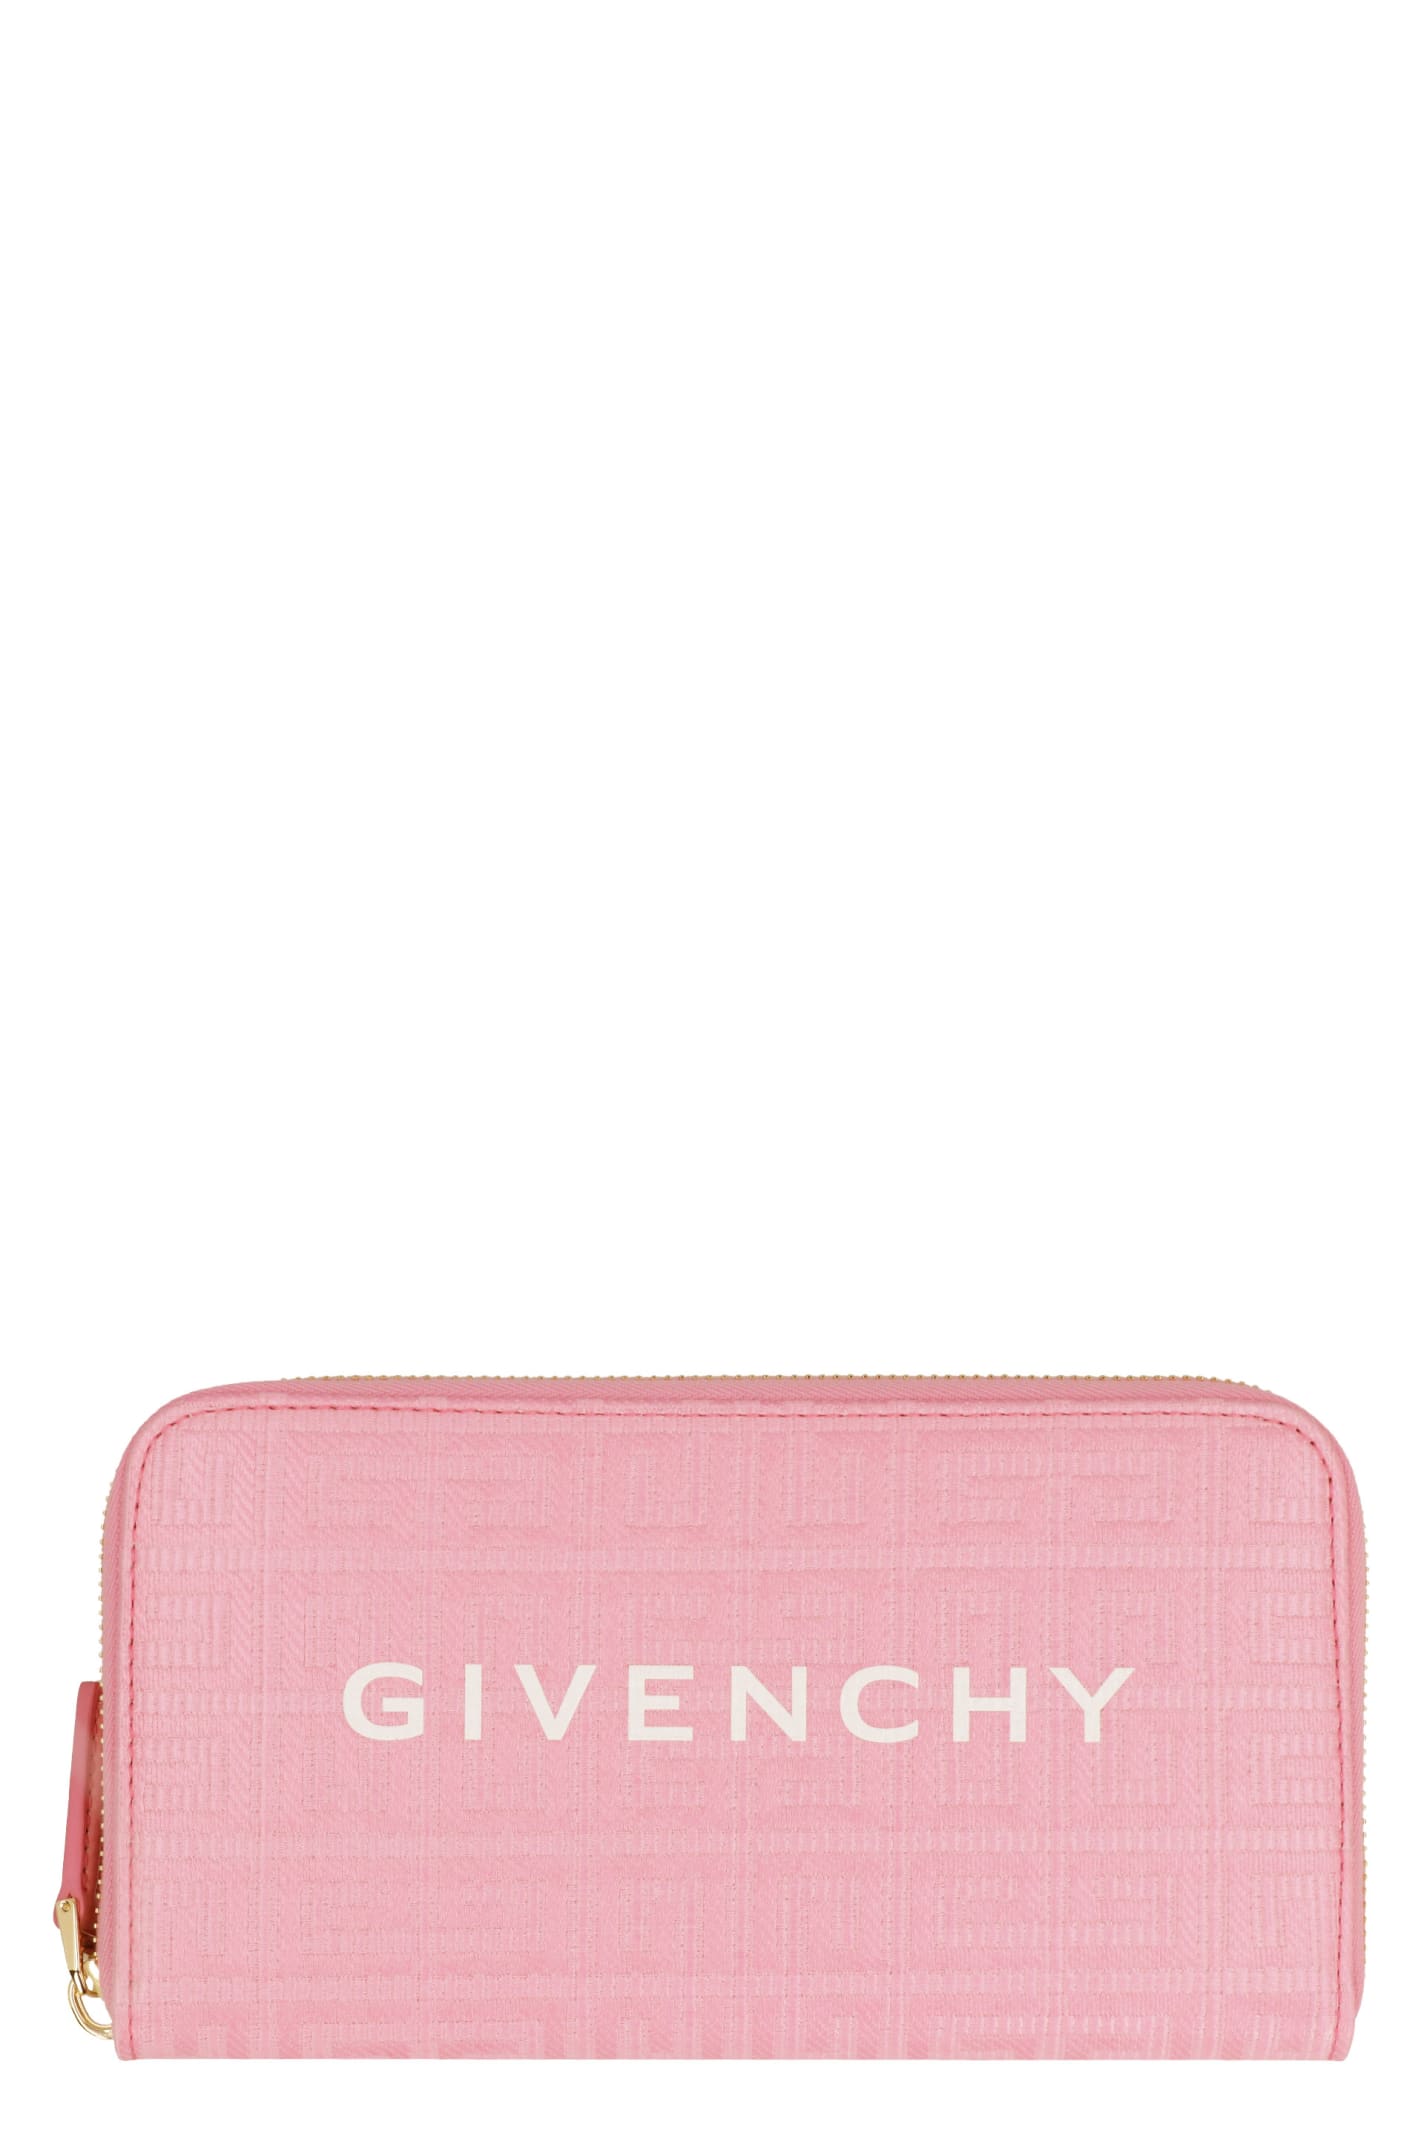 Givenchy Logo Print Zip-around Wallet